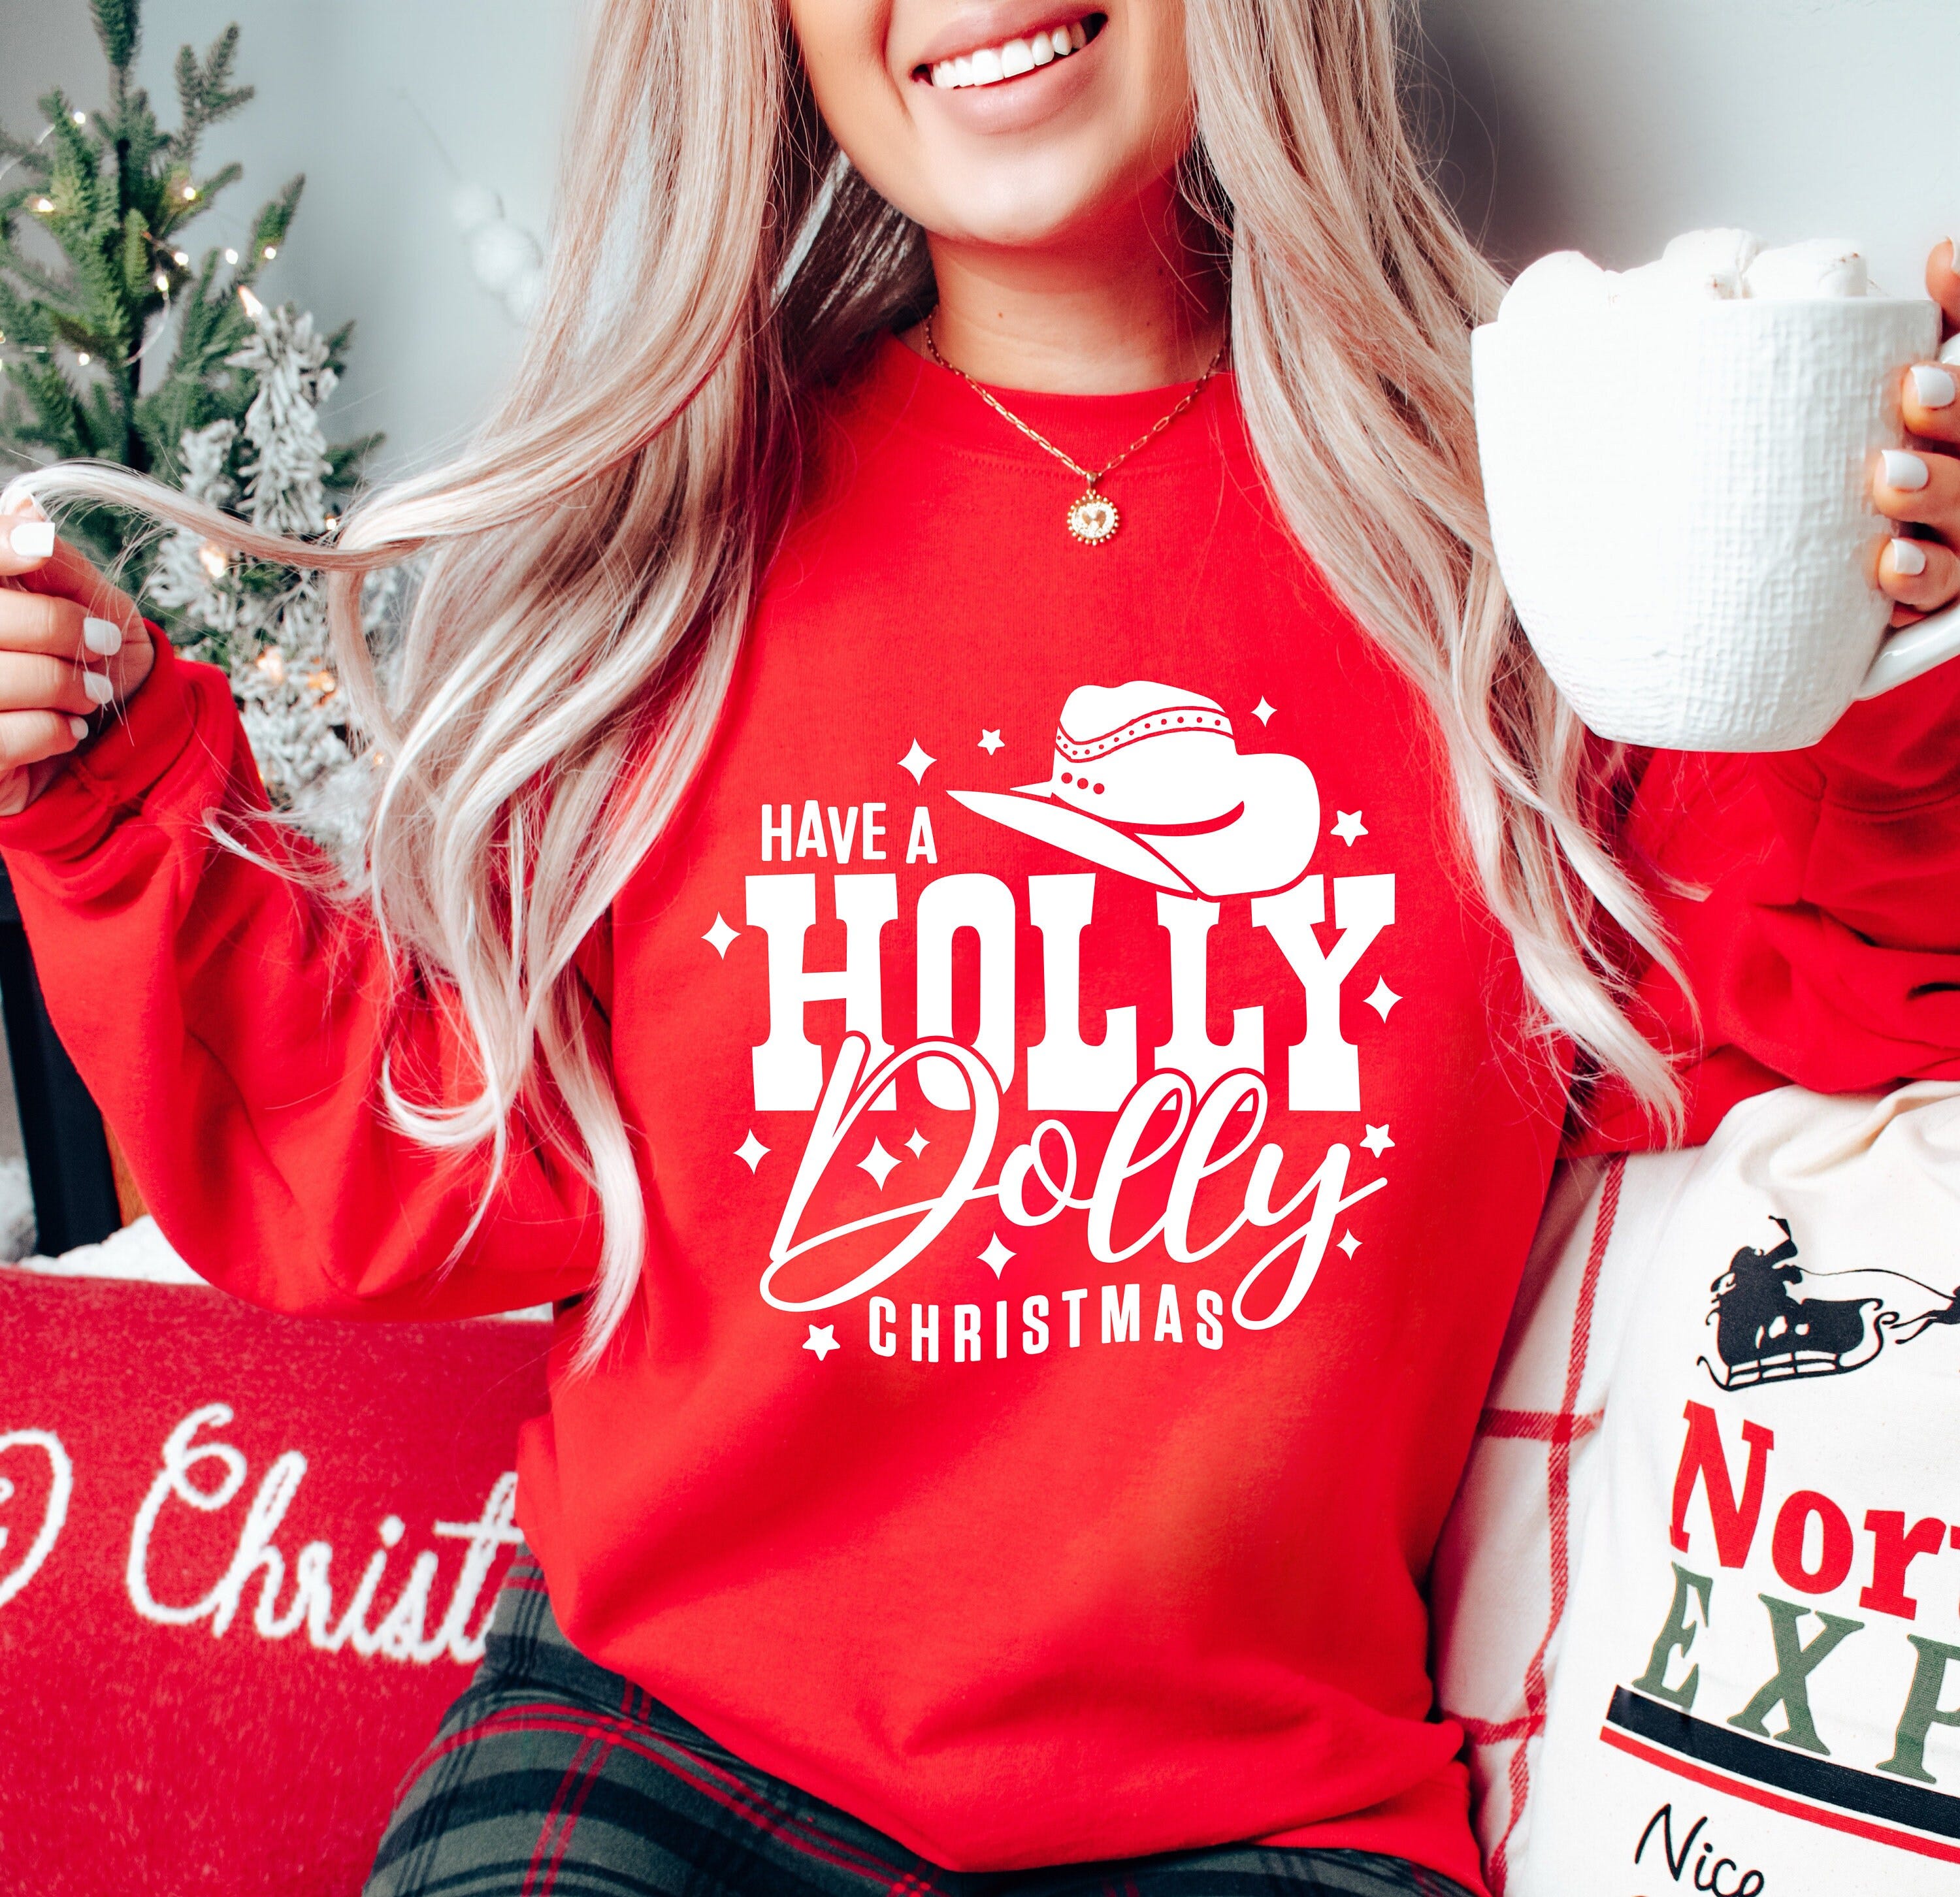 Have a Holly Dolly Christmas Sweatshirt, Christmas Hoodie, Family Christmas, Funny Christmas Gift, Christmas Sweat, Santa Claus, Xmas Hoodie